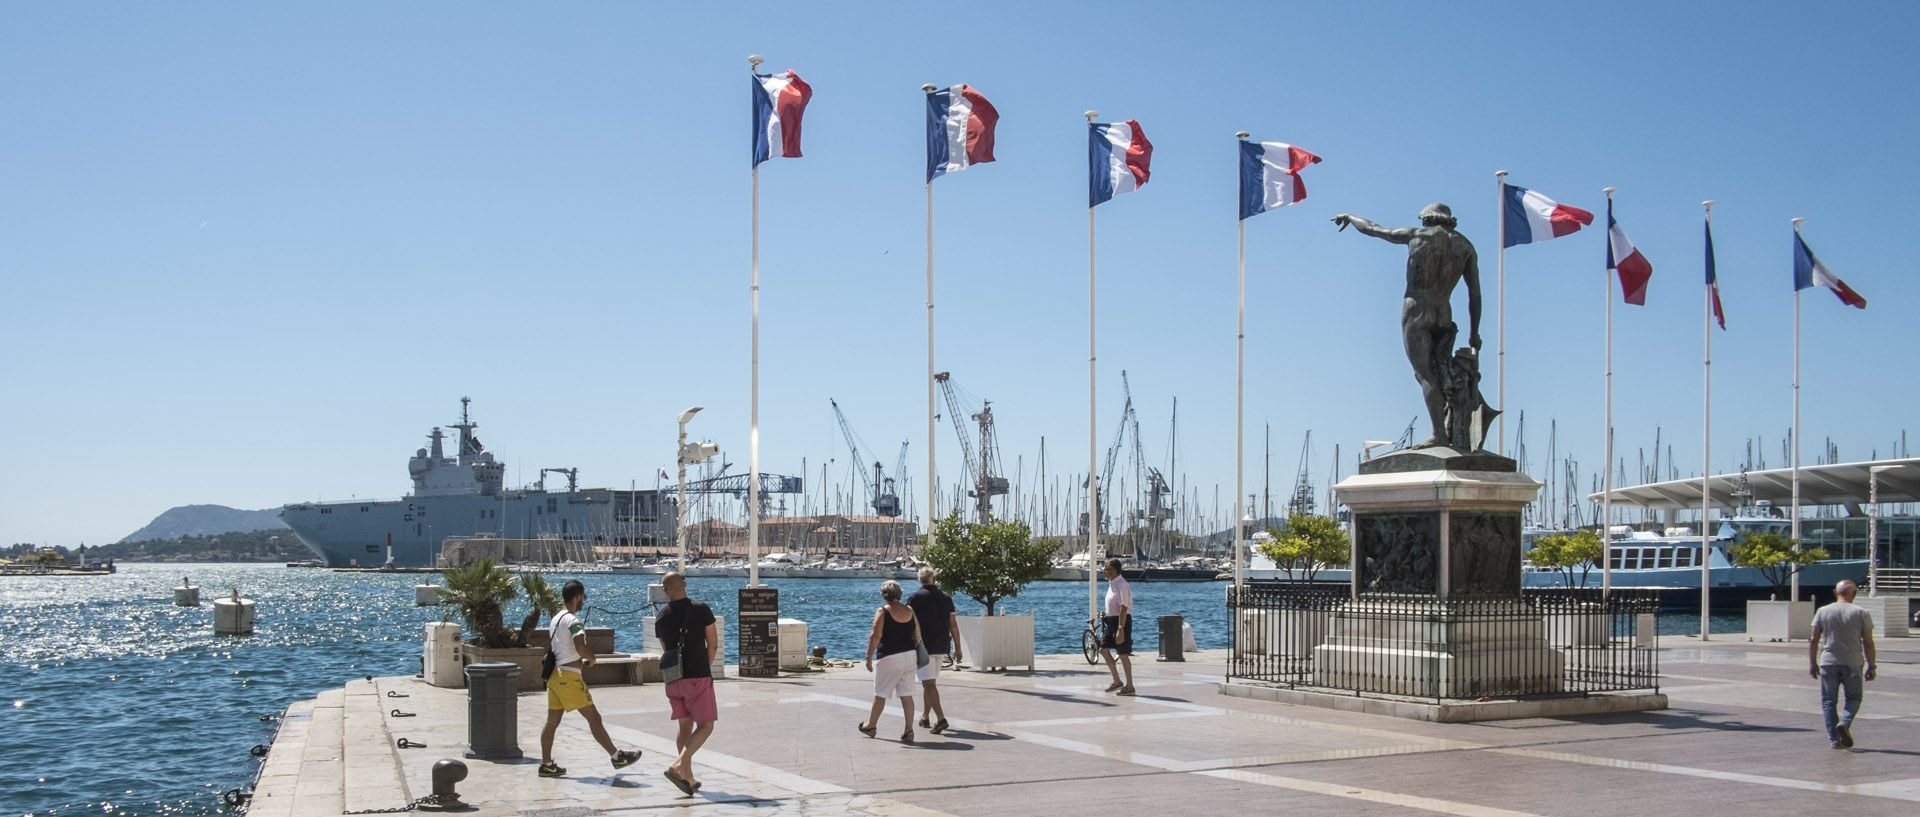 Mercredi 27 août 2014, 14:34, quai Cronstadt, Toulon